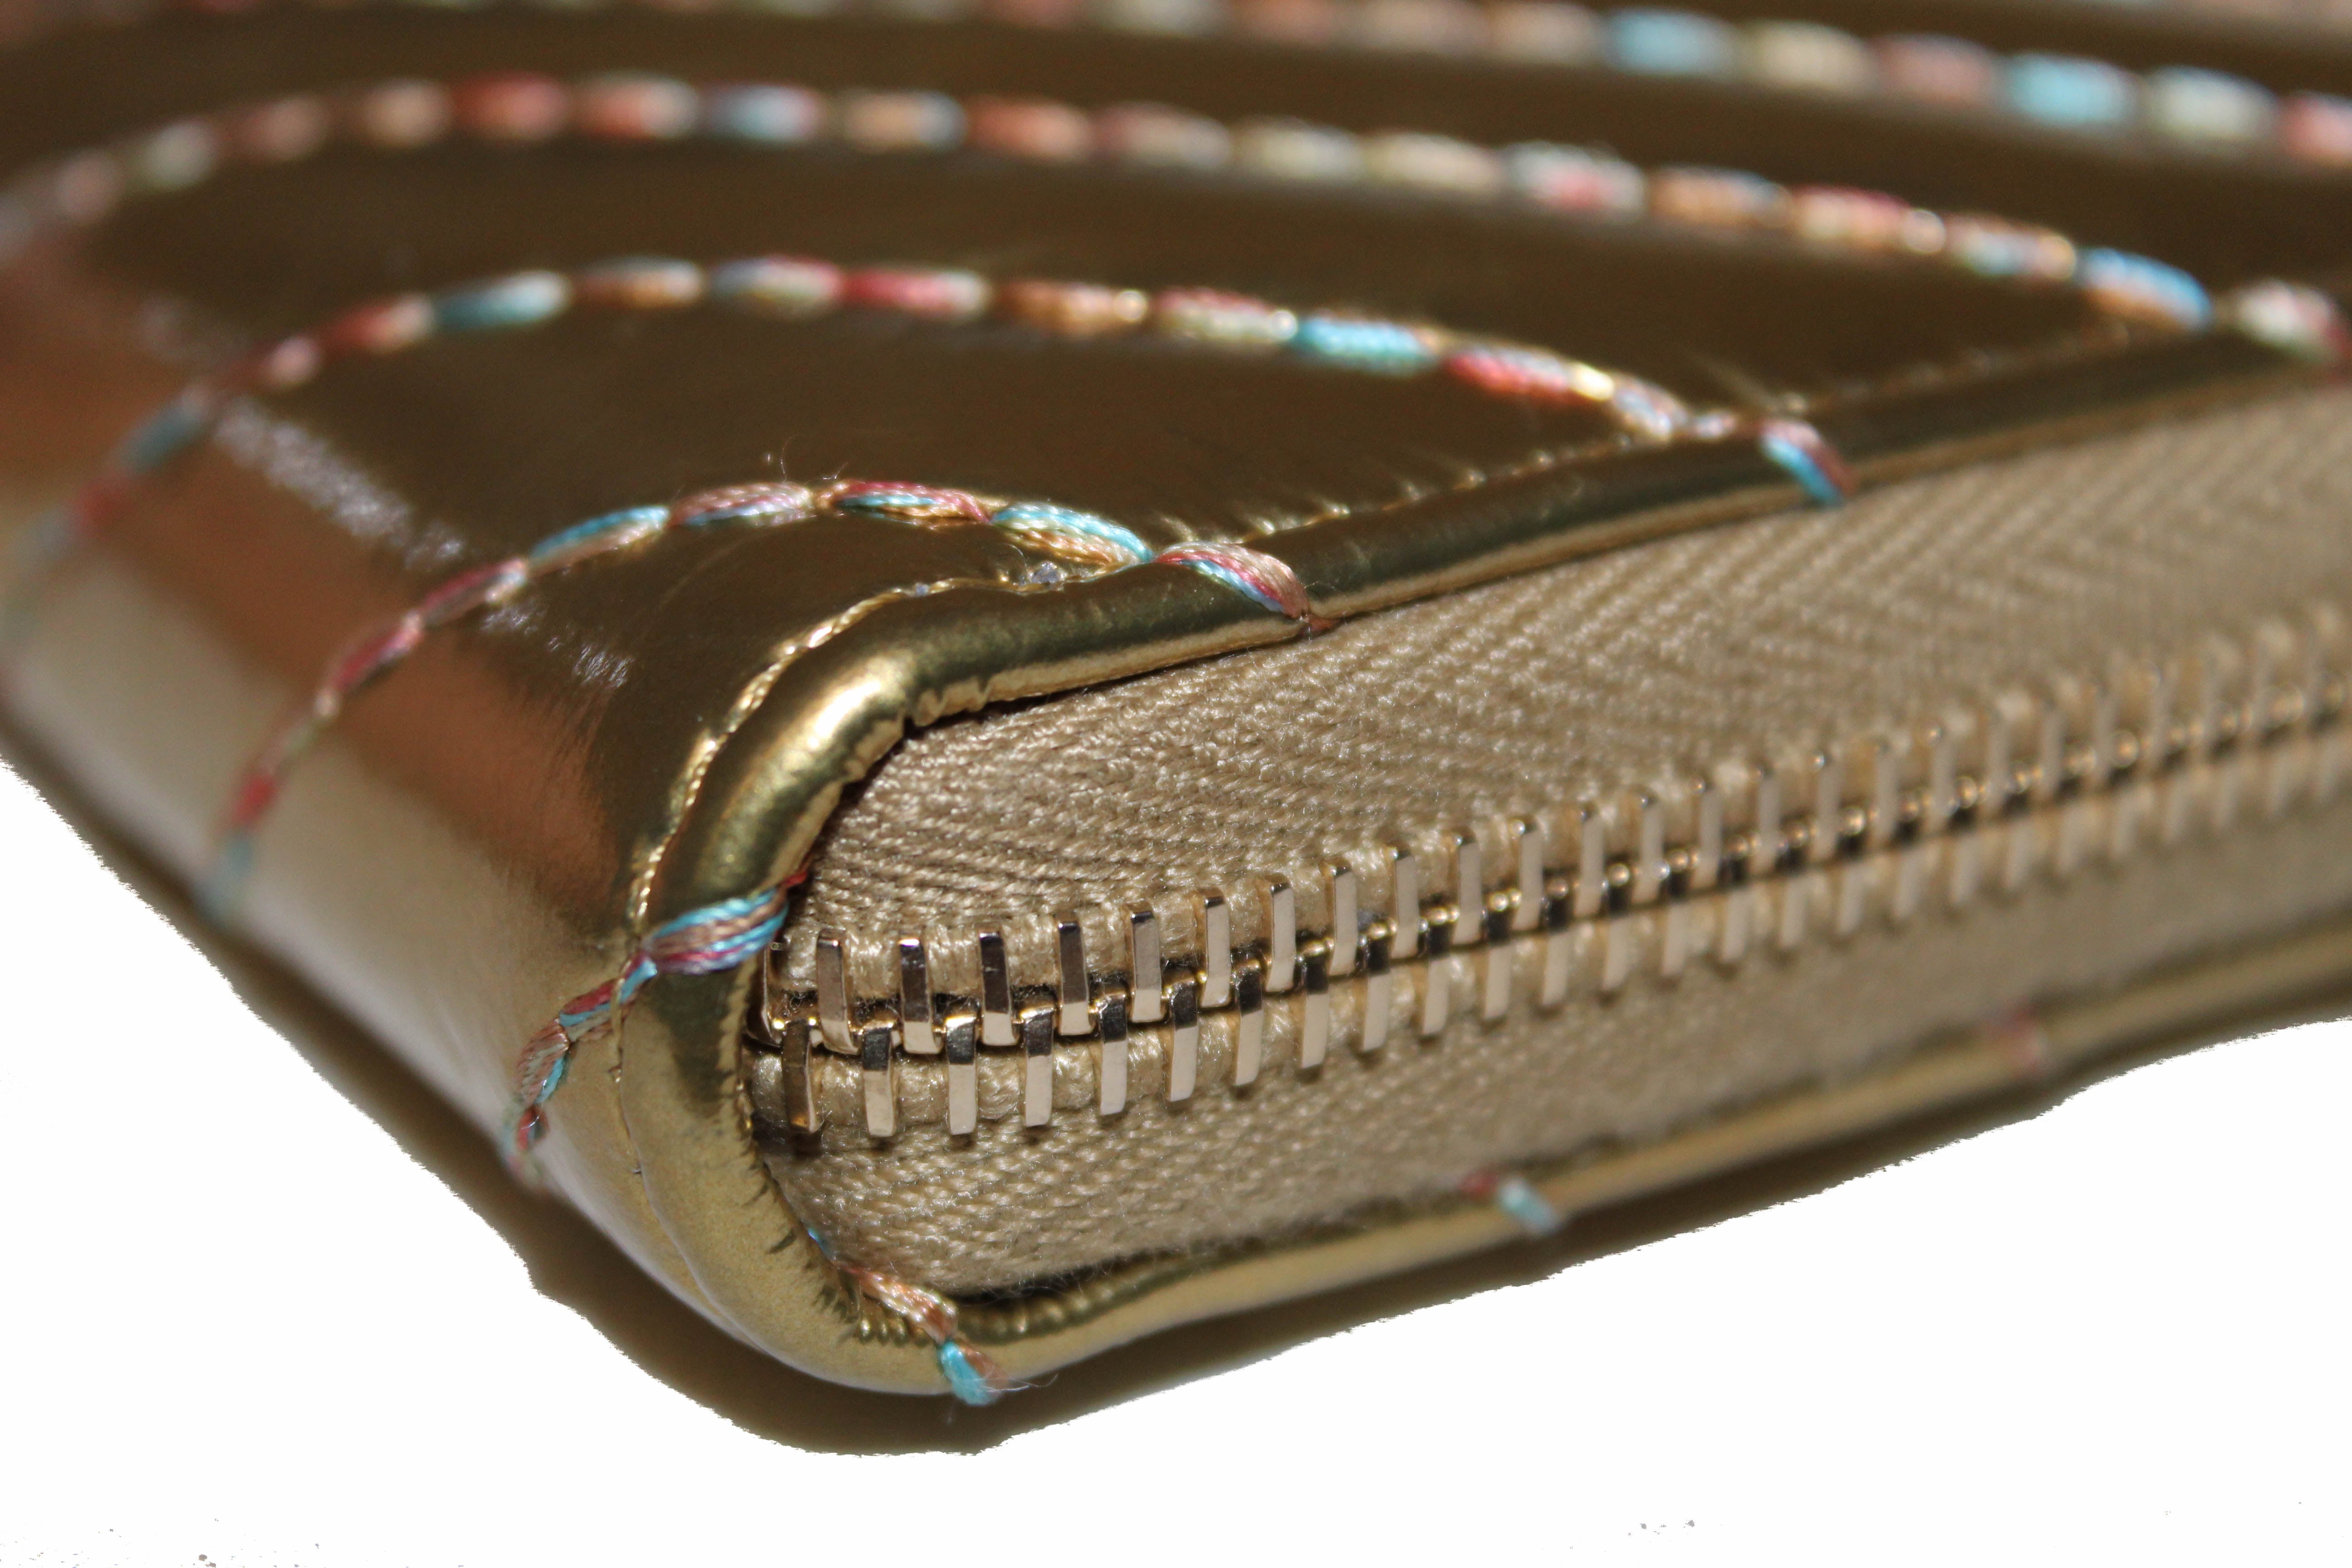 Authentic Chanel Metallic Gold Chevron Quilted Zip Wallet